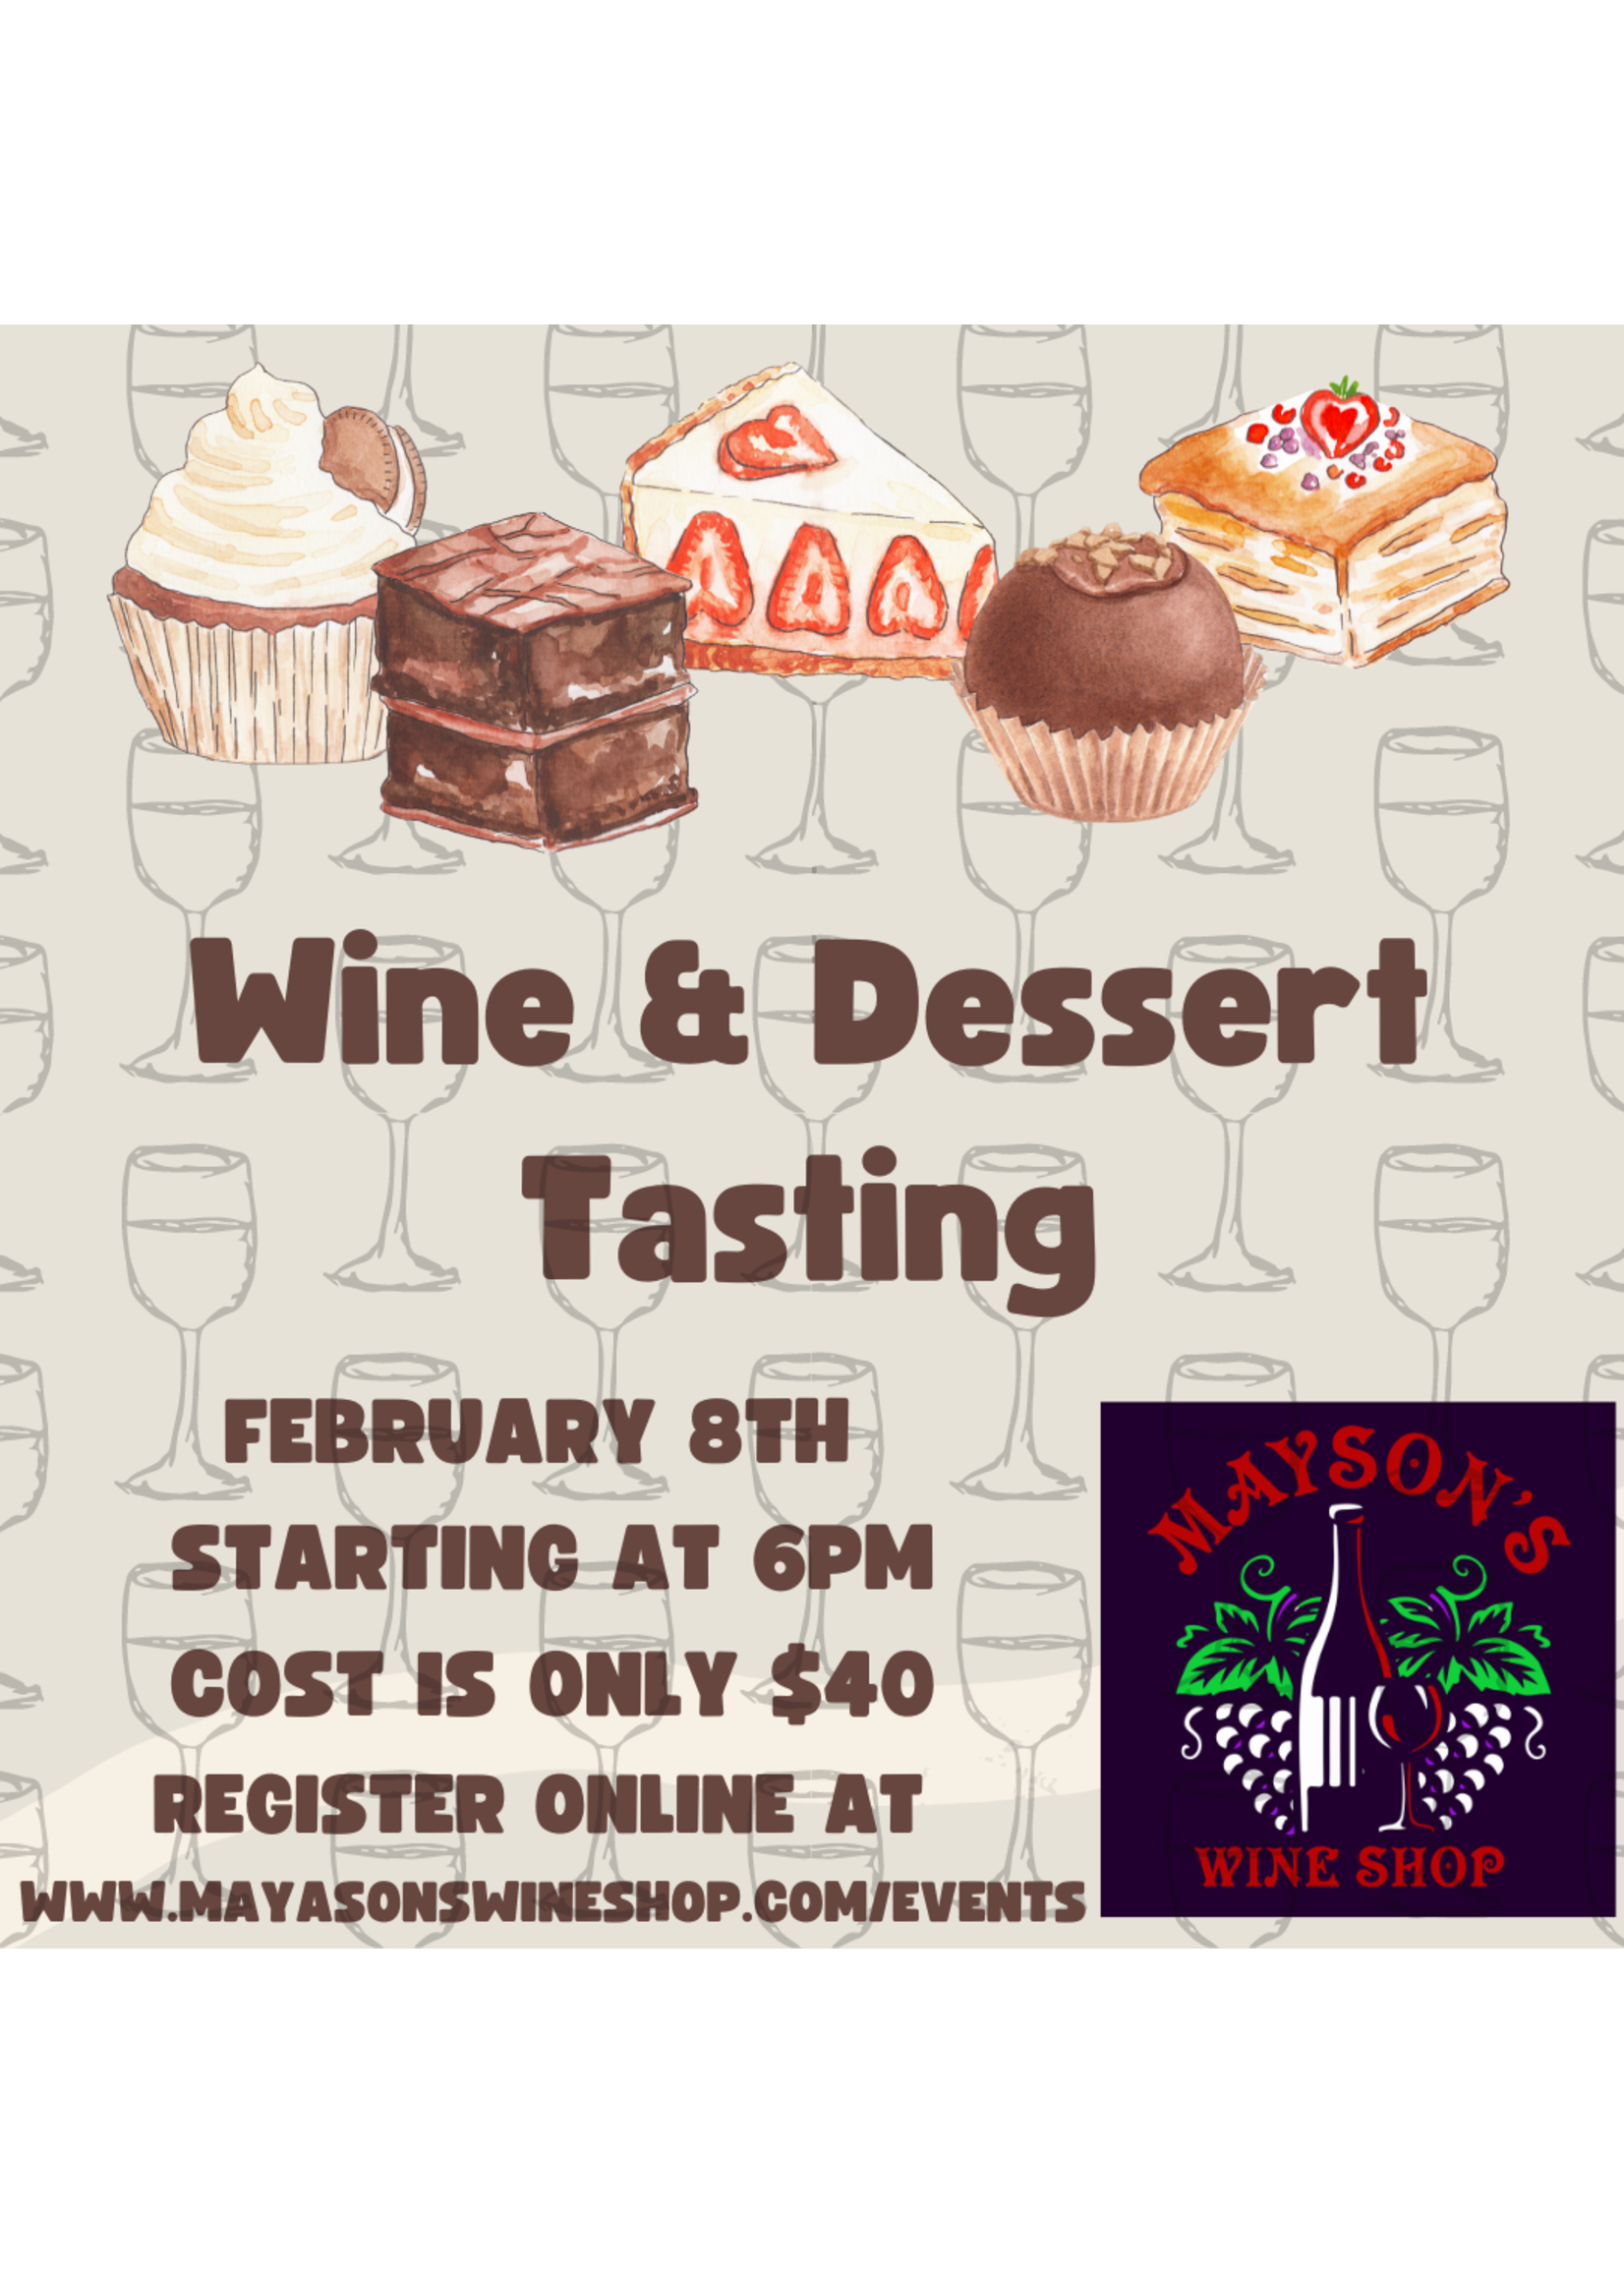 Wine & Dessert Tasting - February 8th starting at 6pm